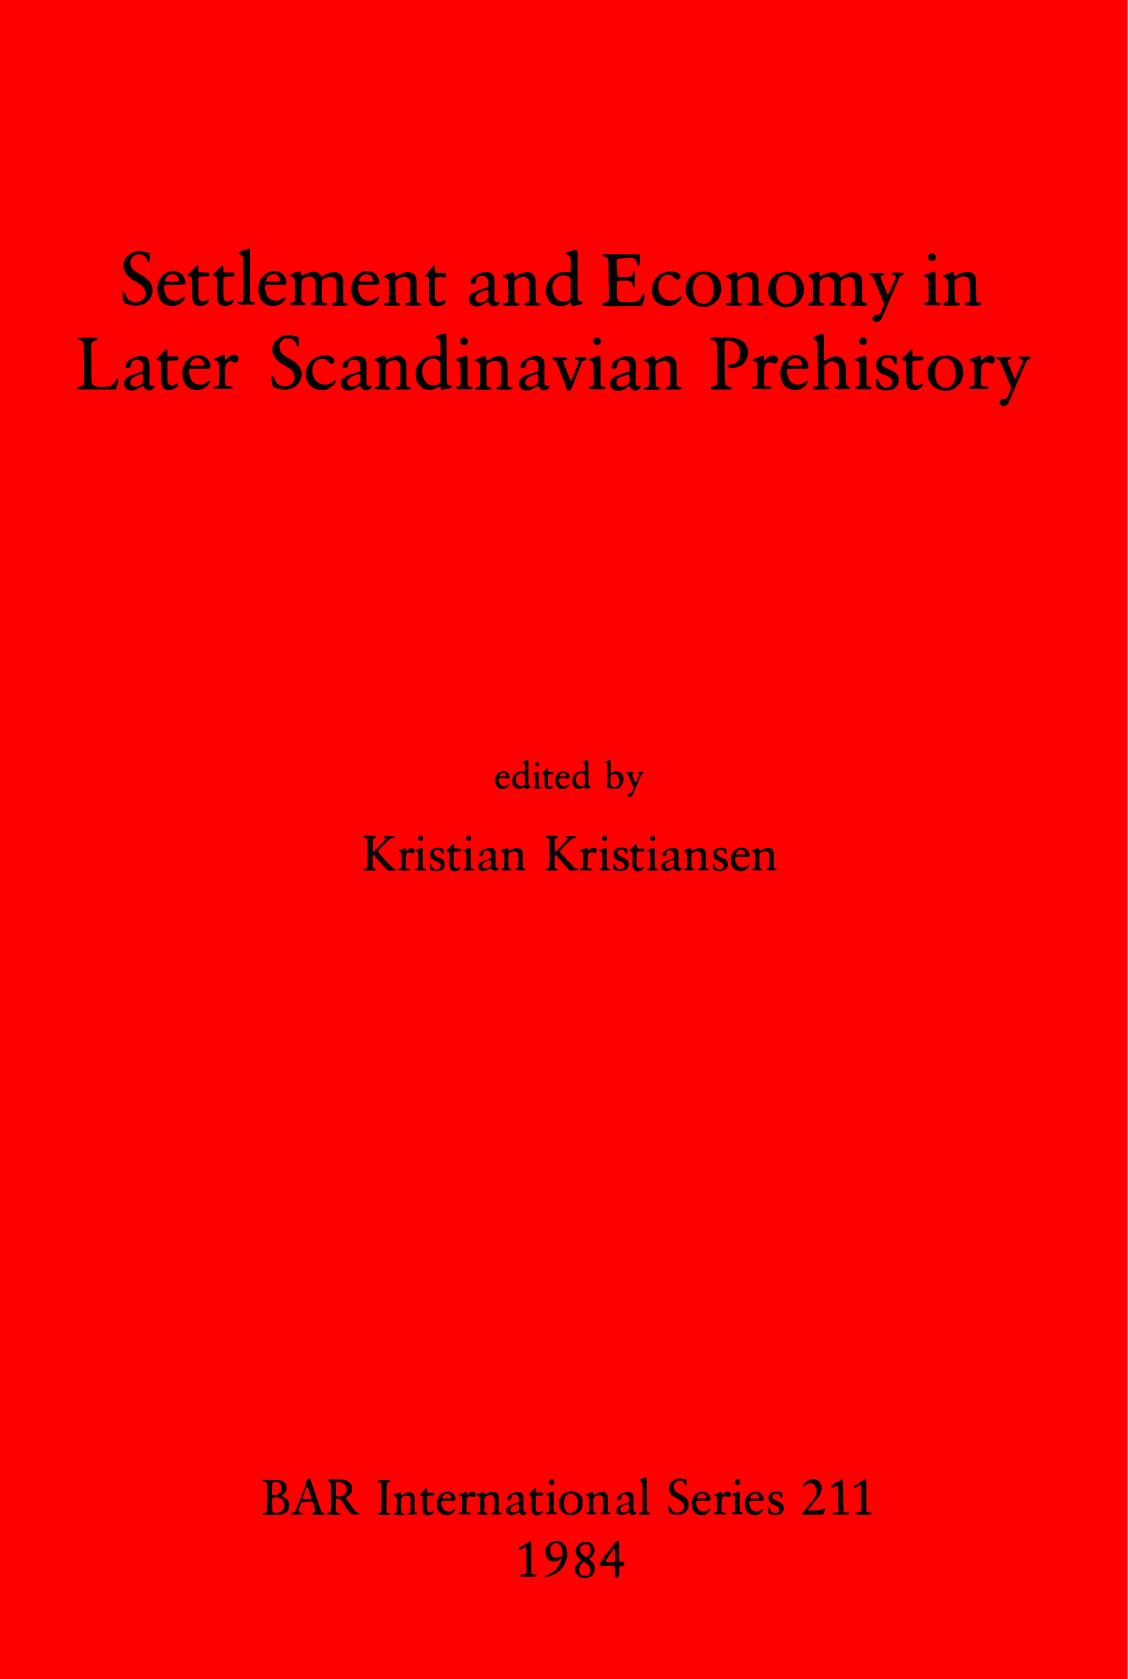 Settlement and Economy in Later Scandinavian Prehistory by Kristian Kristiansen (editor)